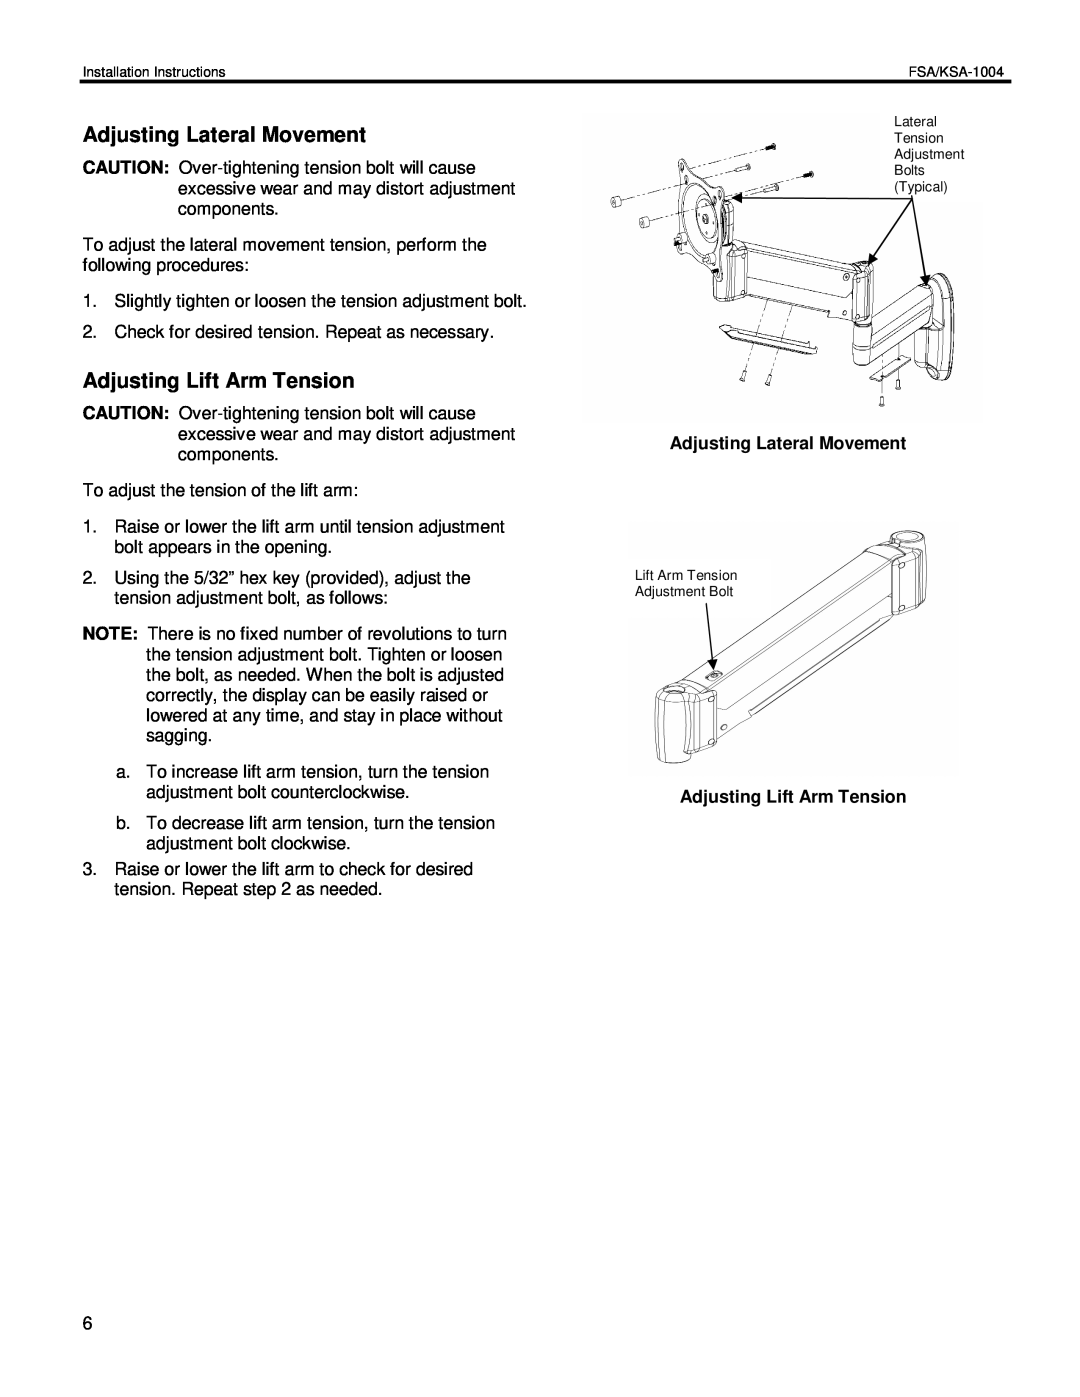 Chief Manufacturing FSA-1004, KSA-1004 installation instructions Adjusting Lateral Movement, Adjusting Lift Arm Tension 